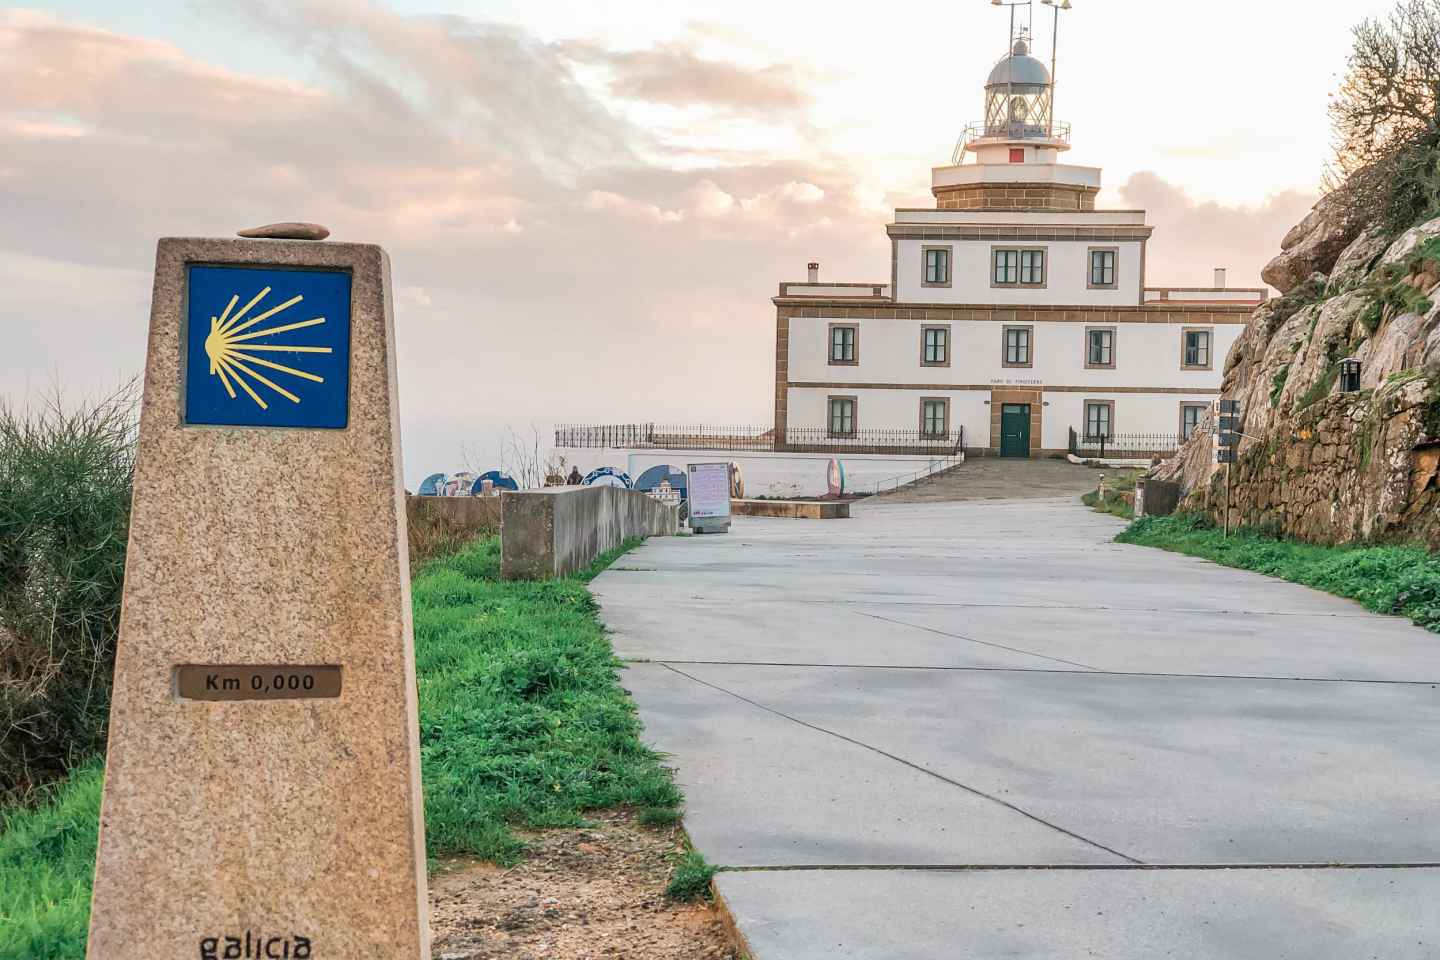 Ab A Coruña: Tagestour Costa da Morte und Kap Finisterre